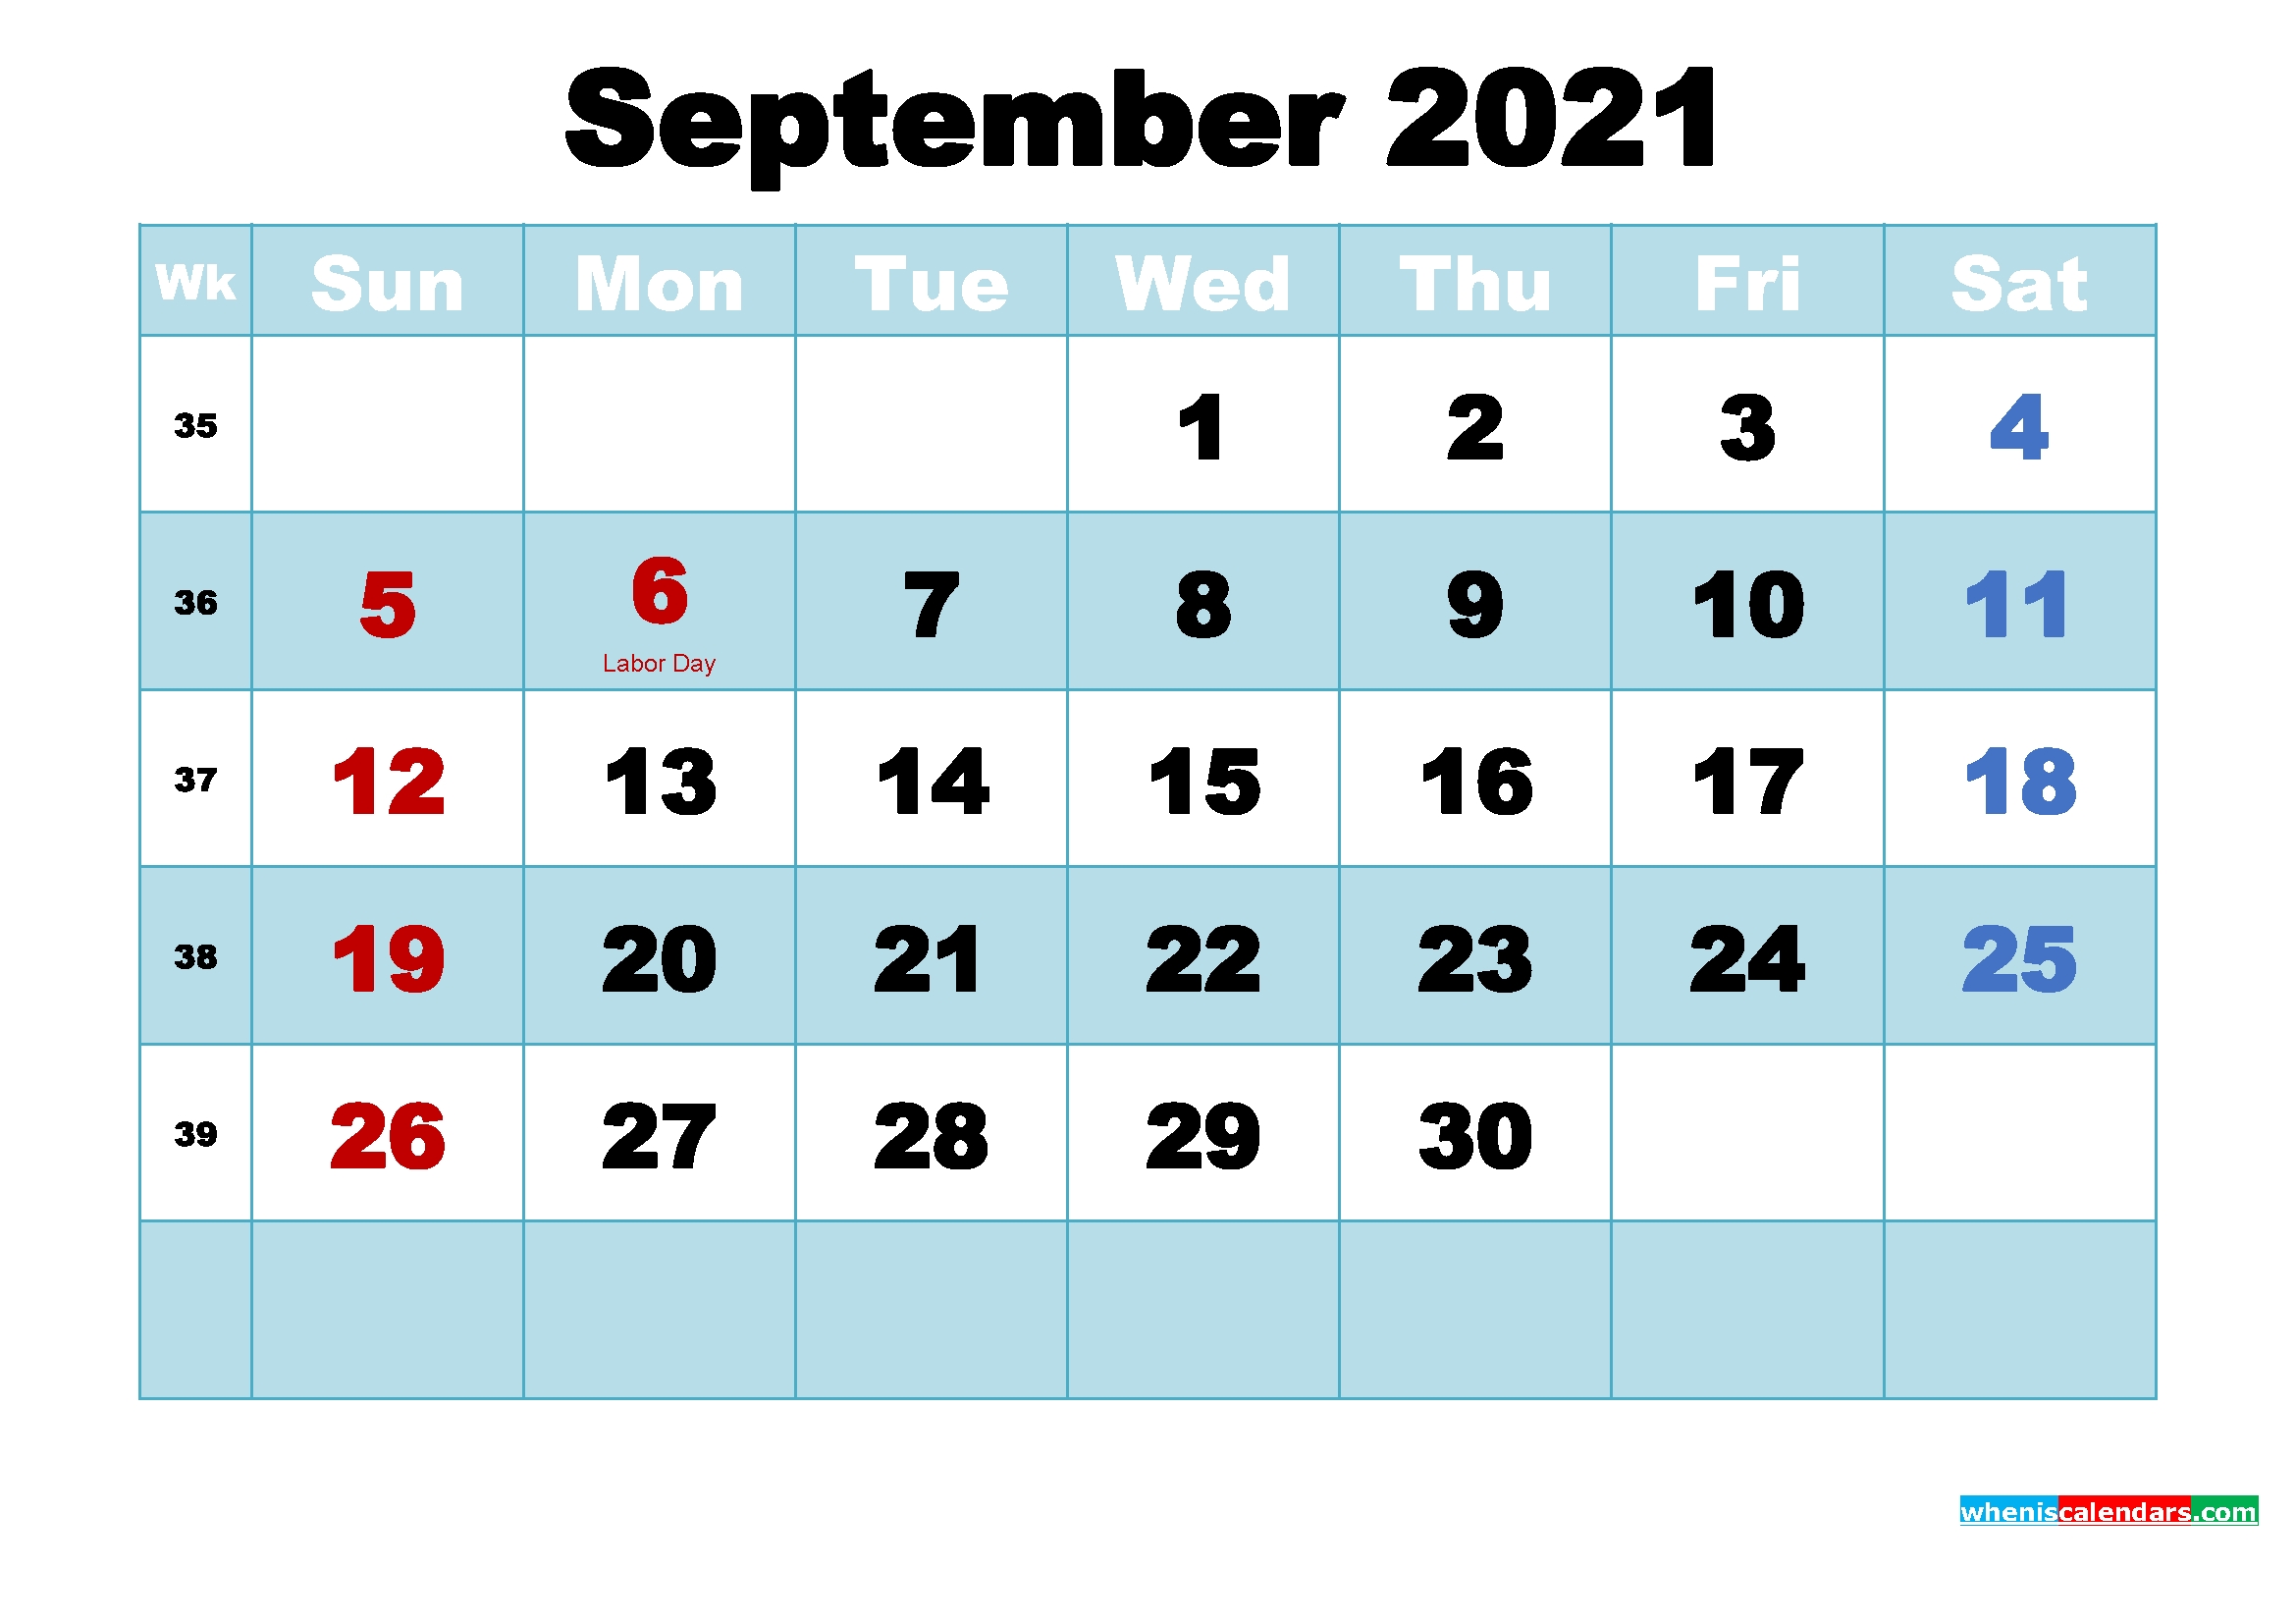 September 2021 Free Printable Calendar With Holidays September 2021 Calendar With Holidays